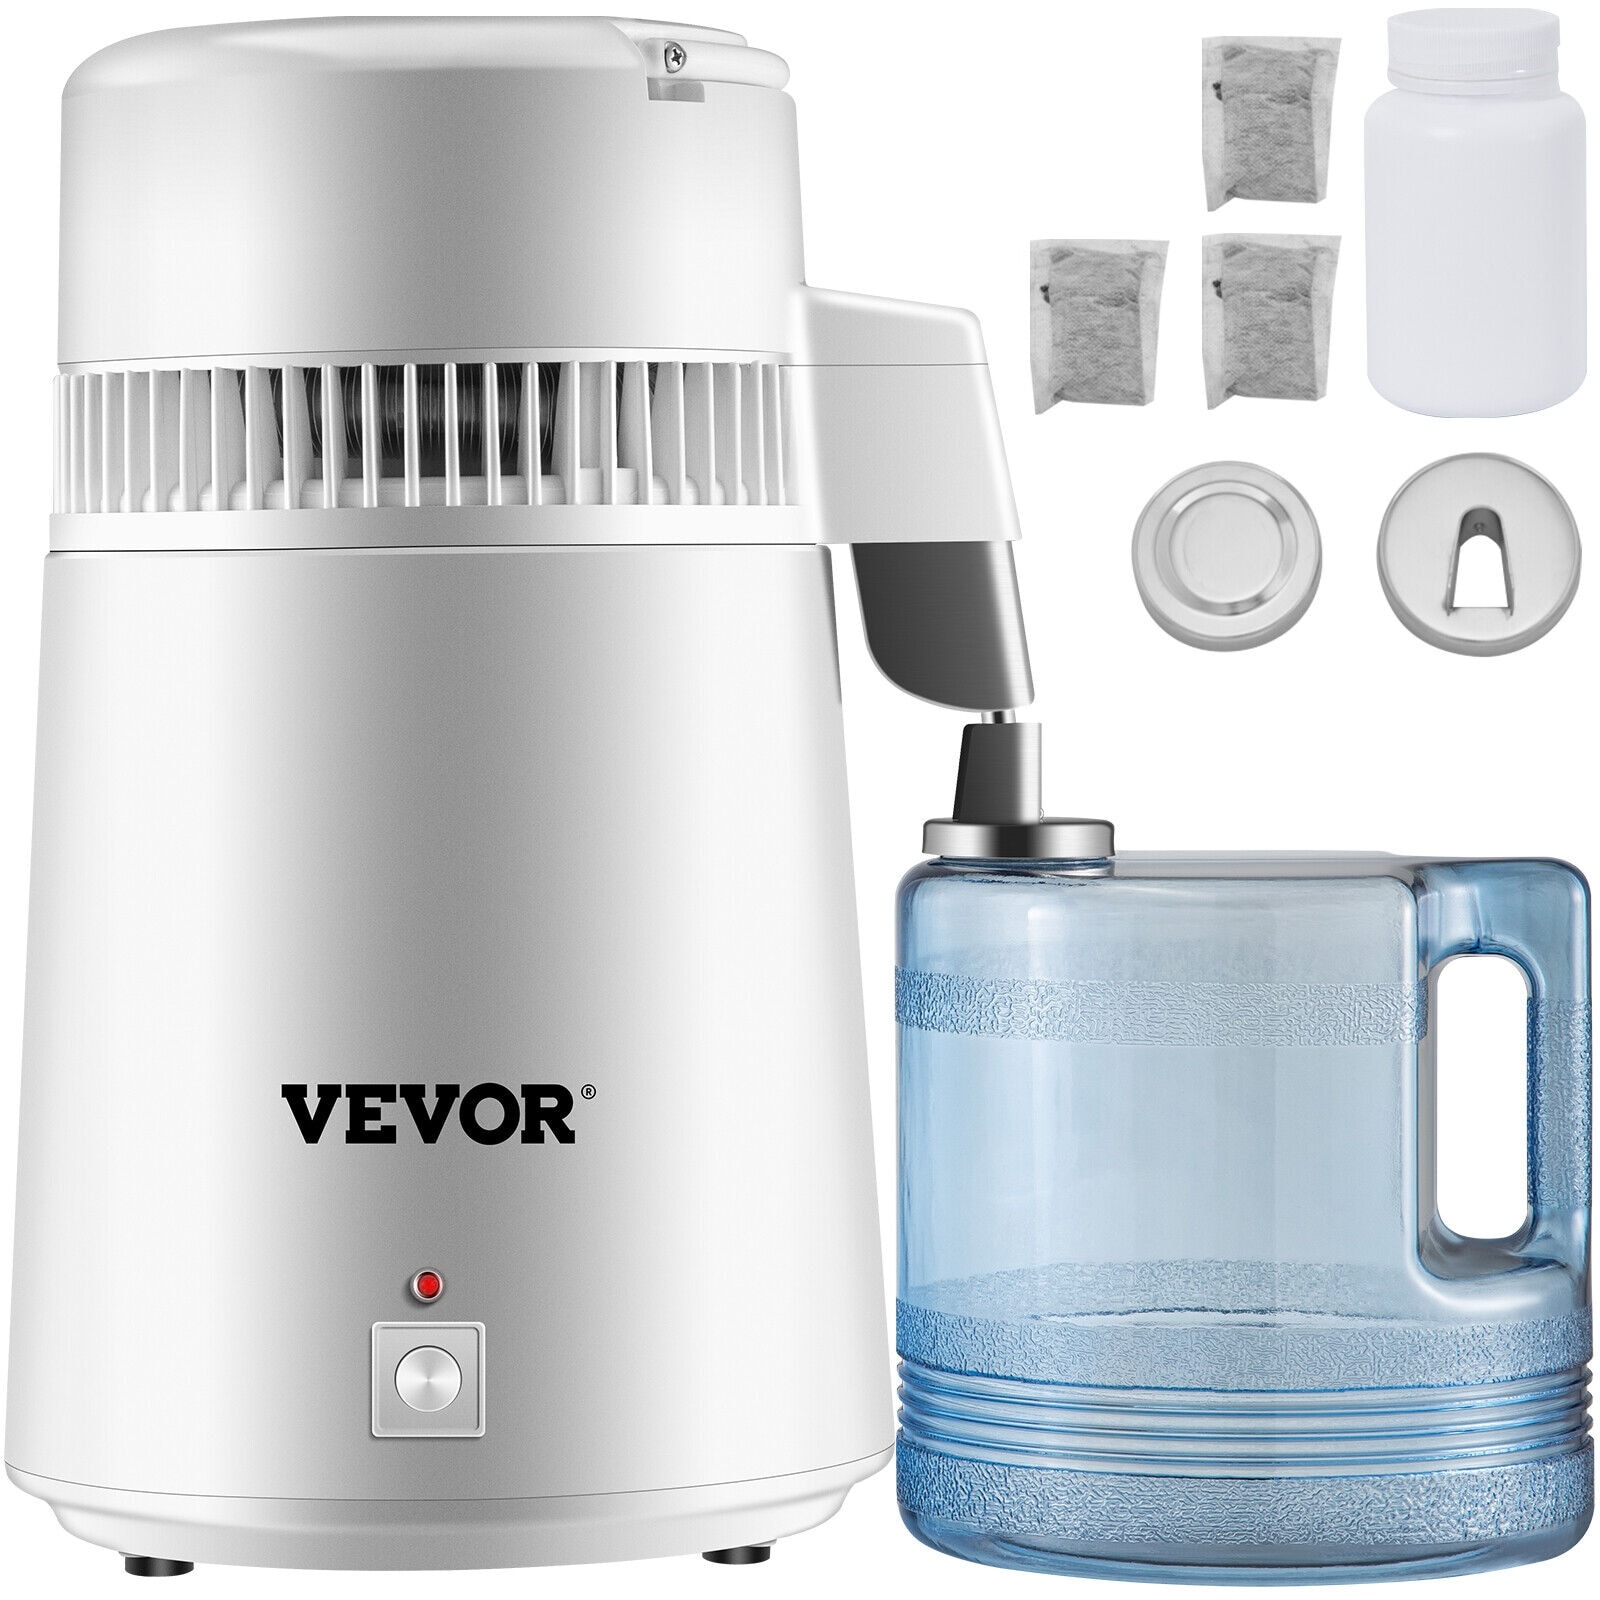 VEVOR Hot Water Dispenser, Adjustable 4 Temperatures Water Boiler